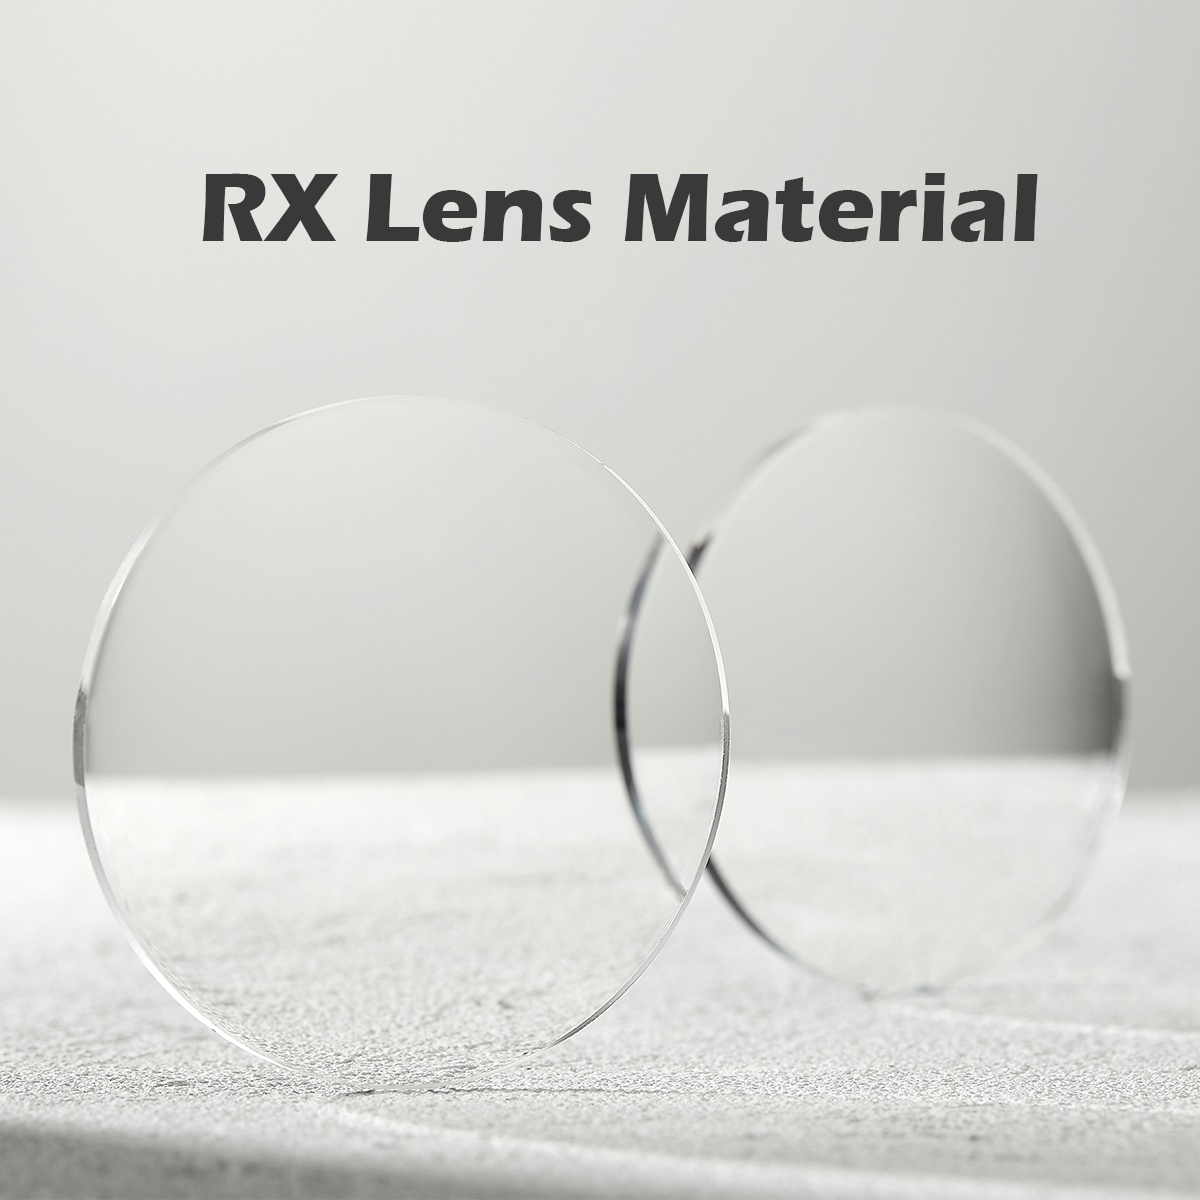 RX Lens Material